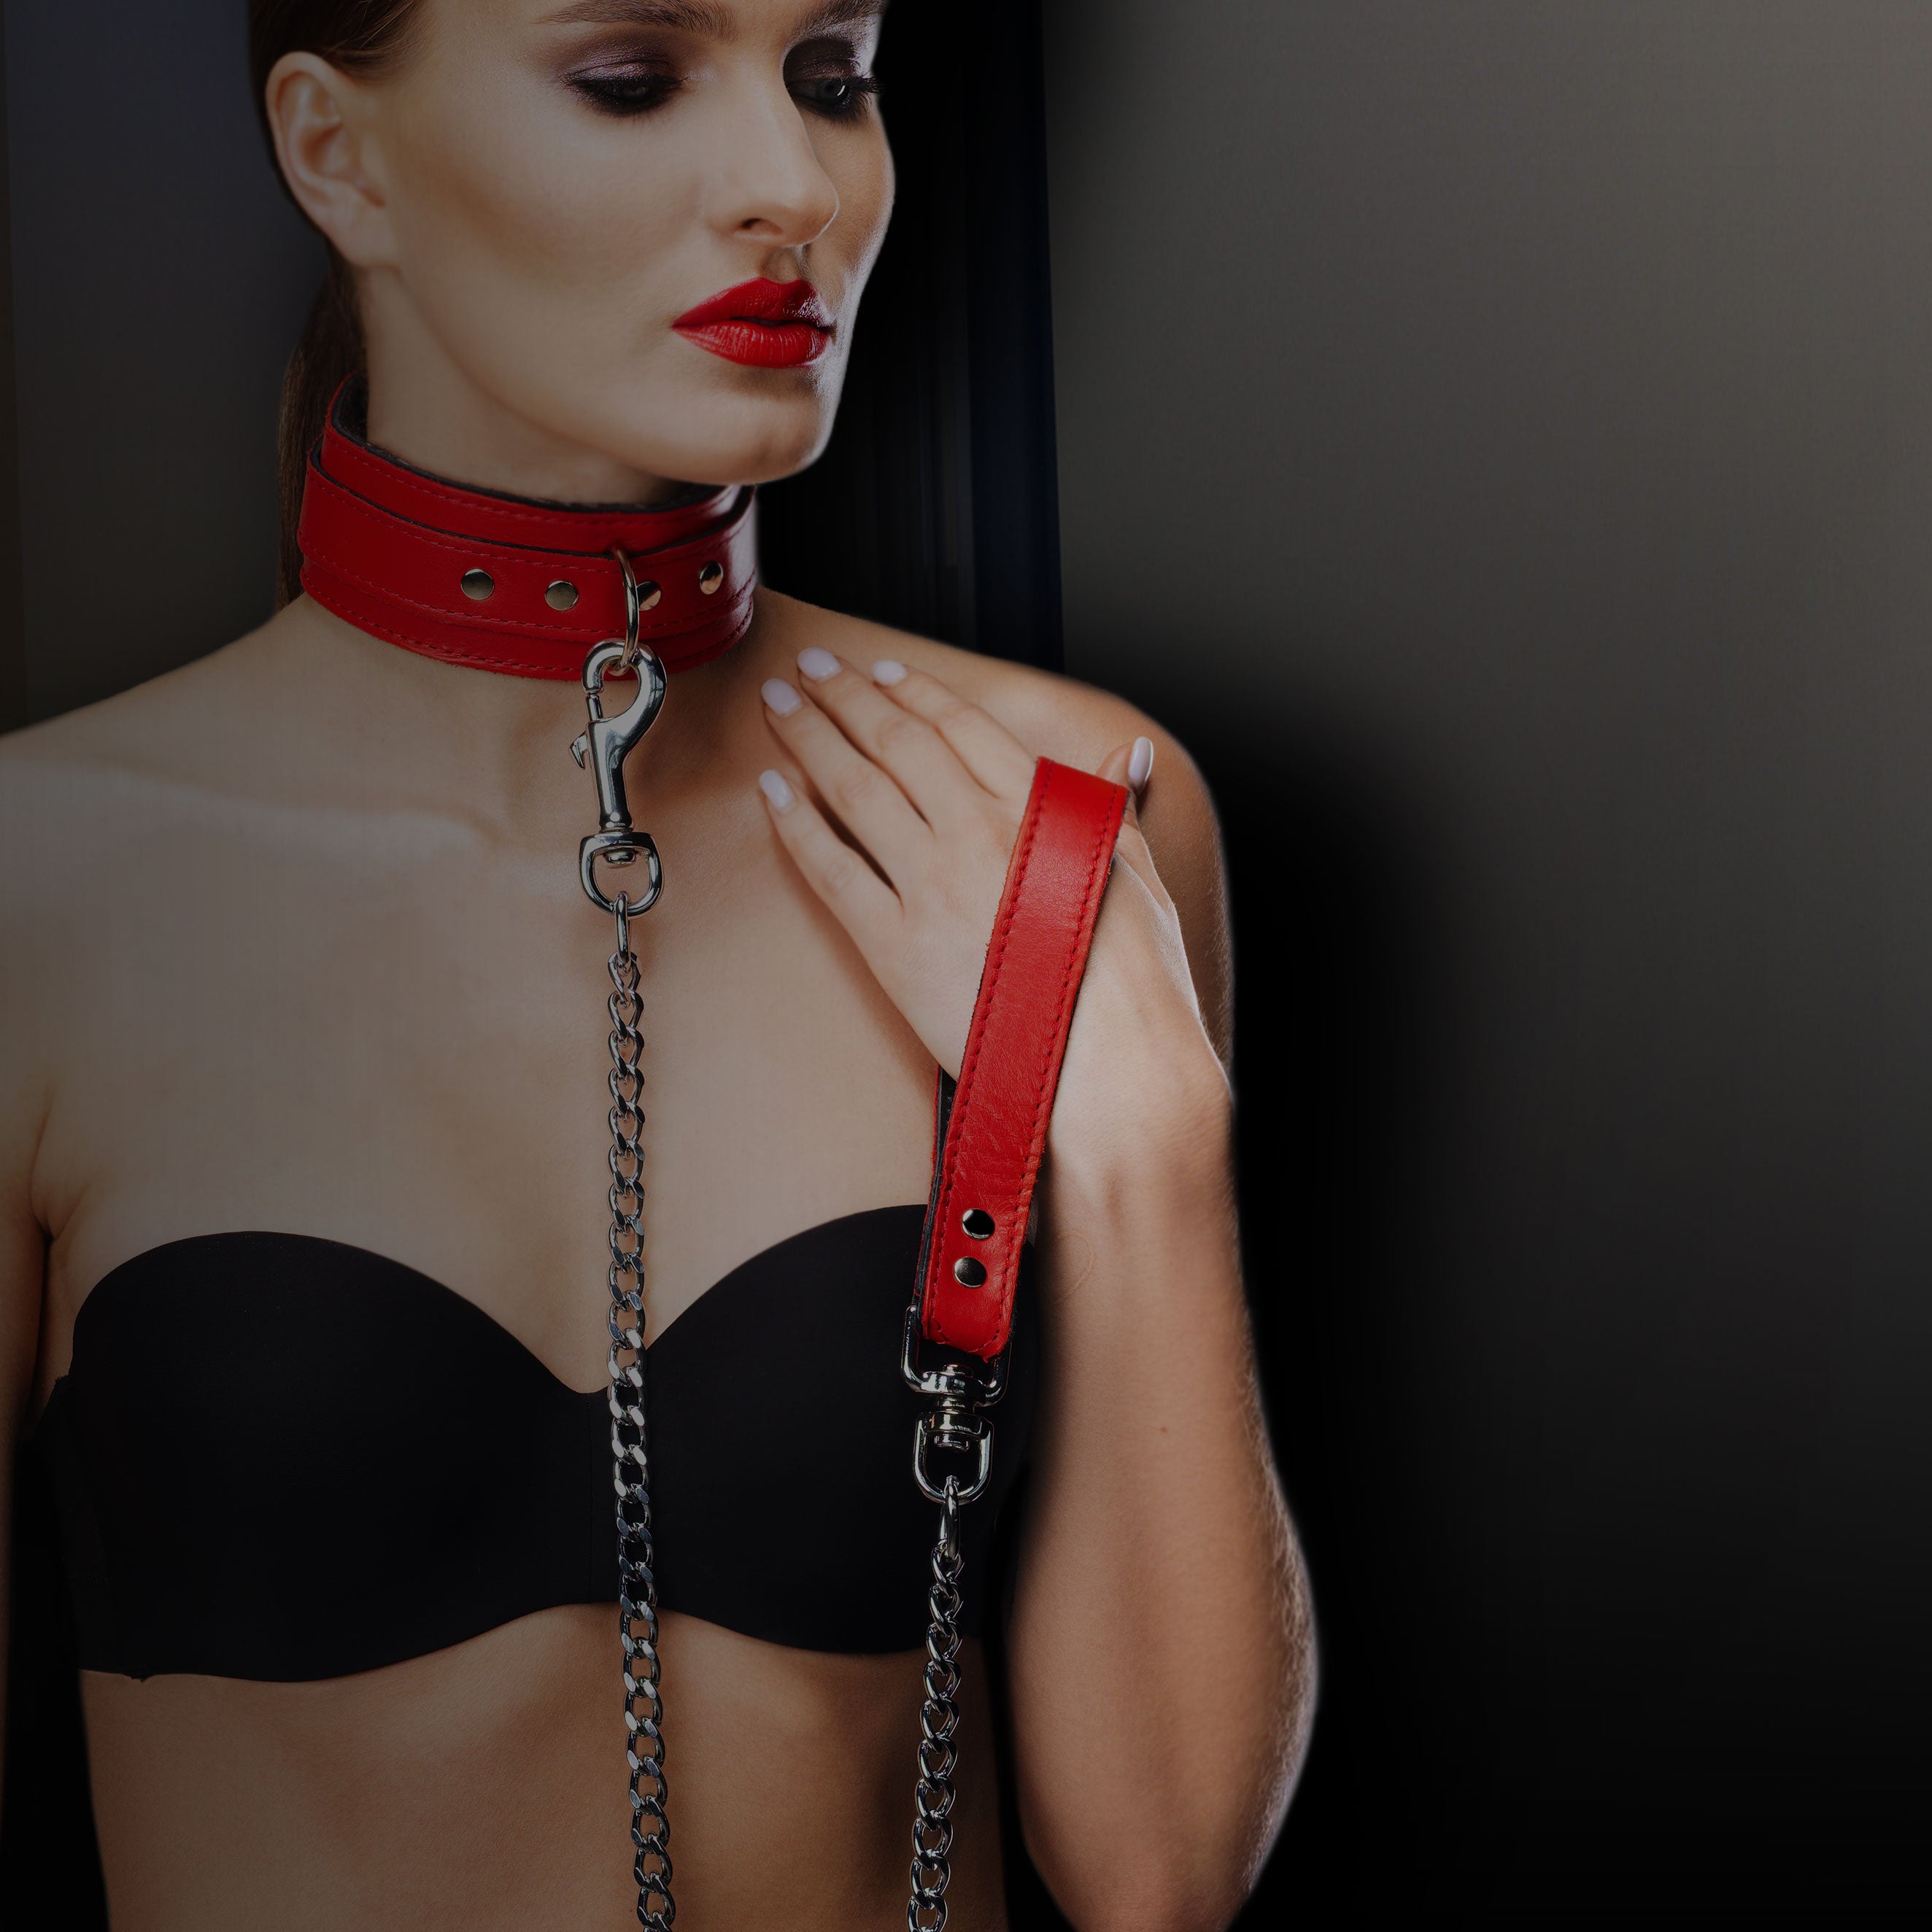 Berlin Luxury Bondage Collar and Leash Red